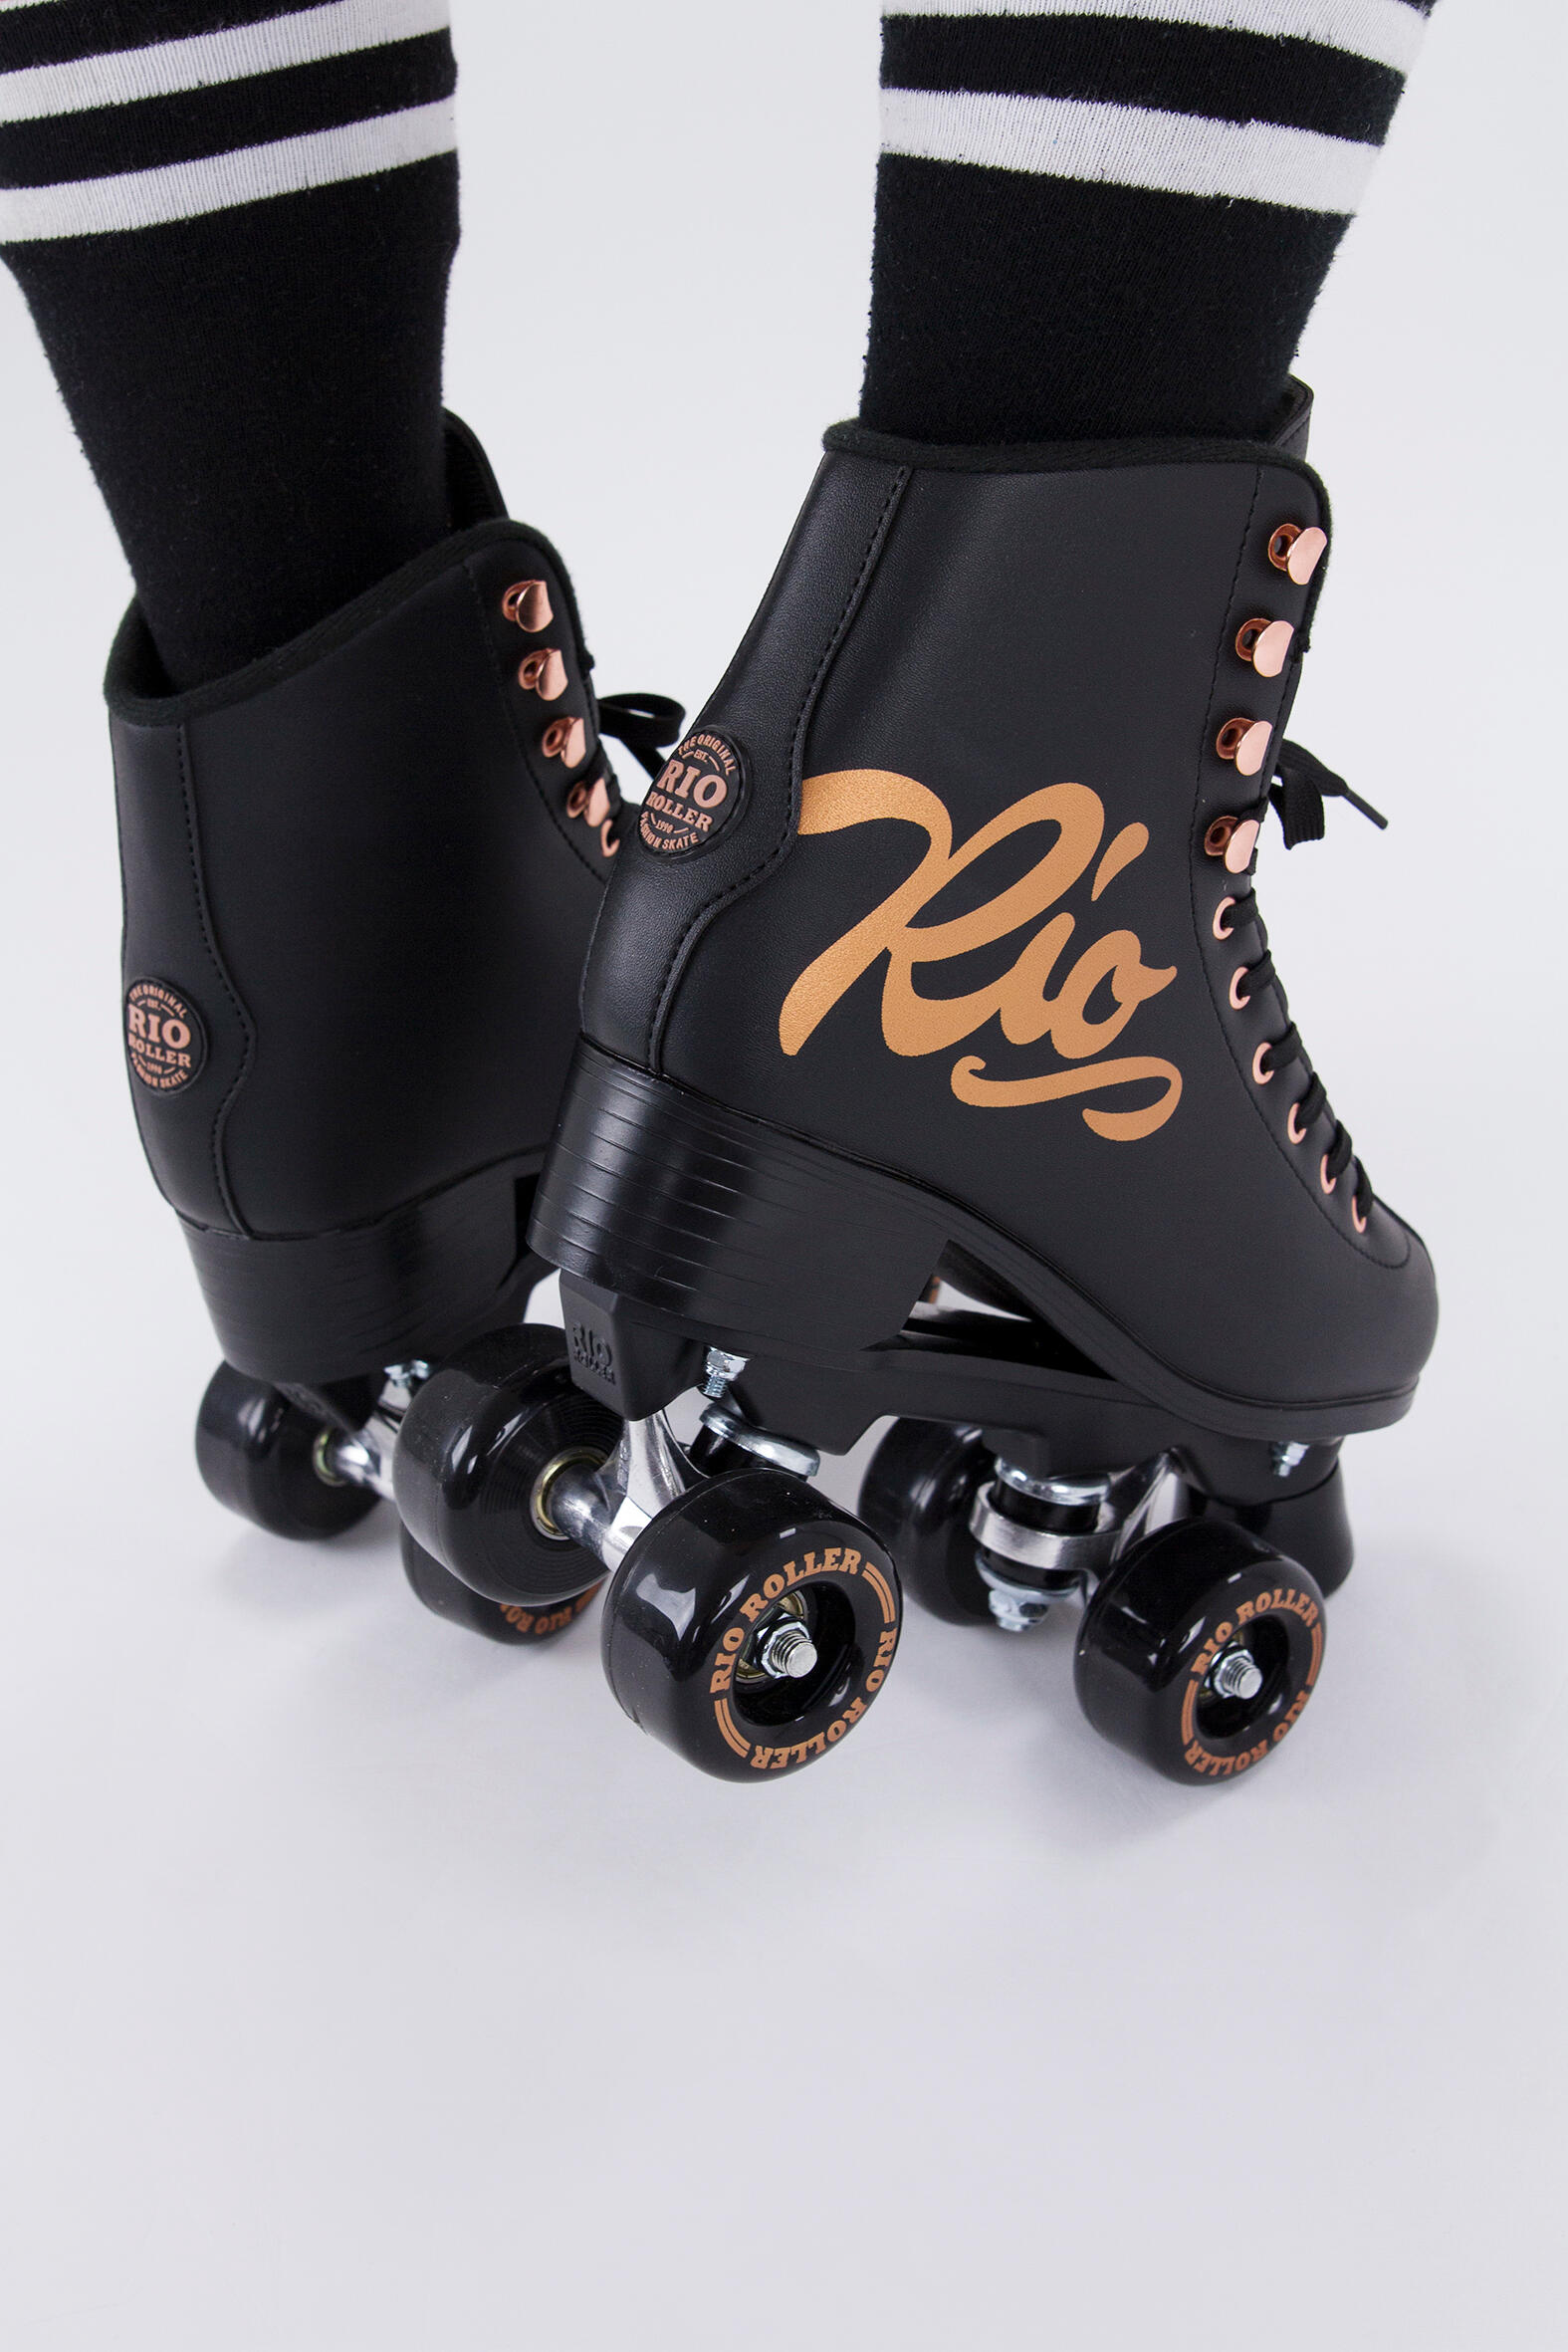 Rose Figure Quad Roller Skates 4/5